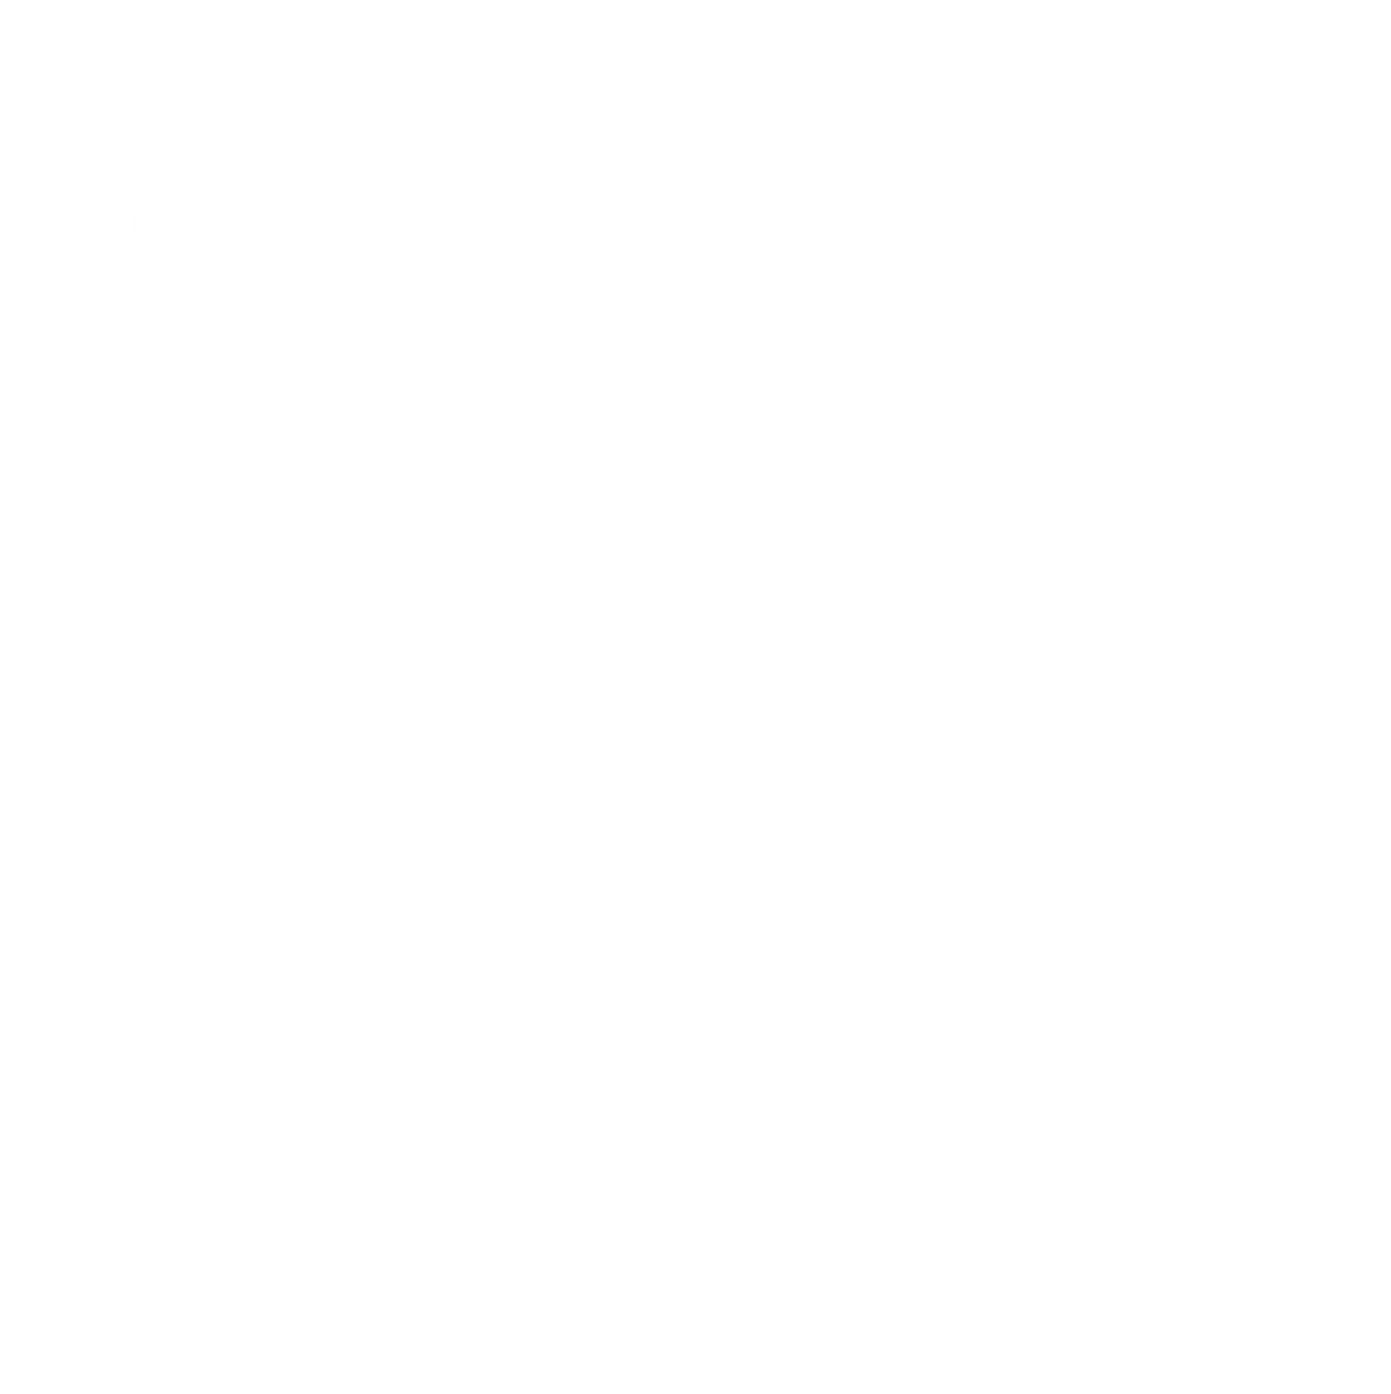 Swancon 42